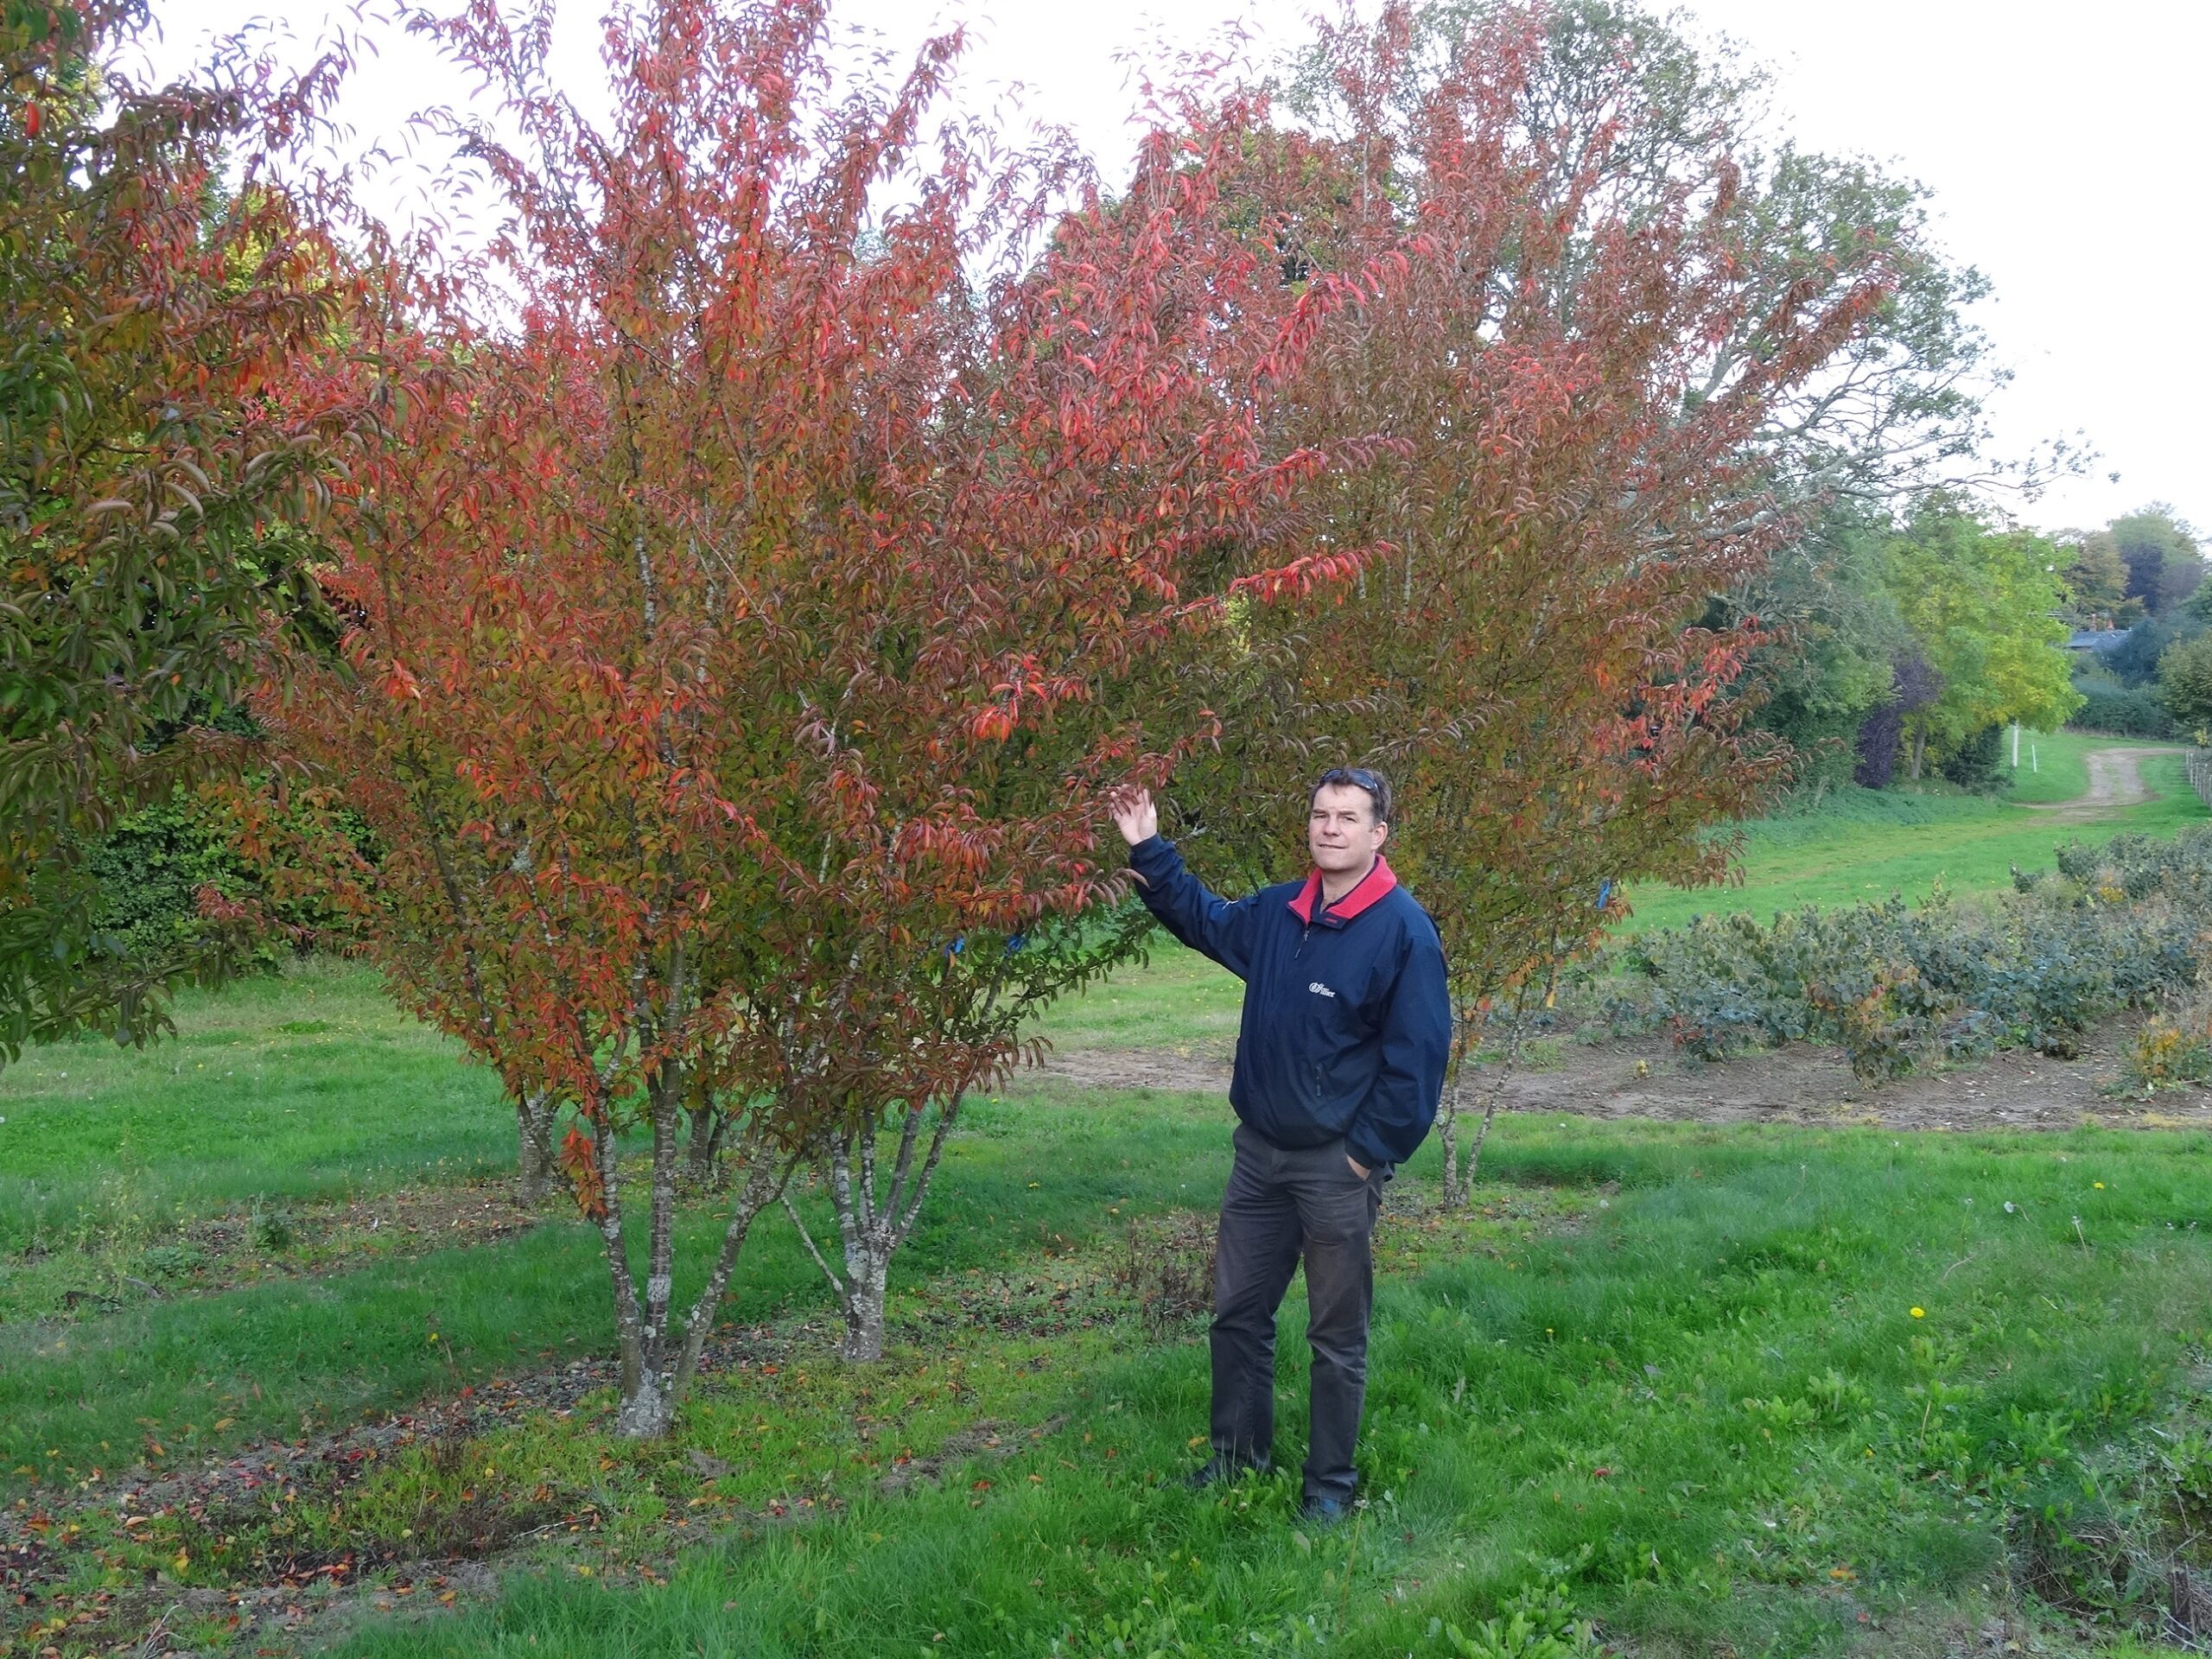 Prunus Pandora semi mature tree in autumn colour growing in field